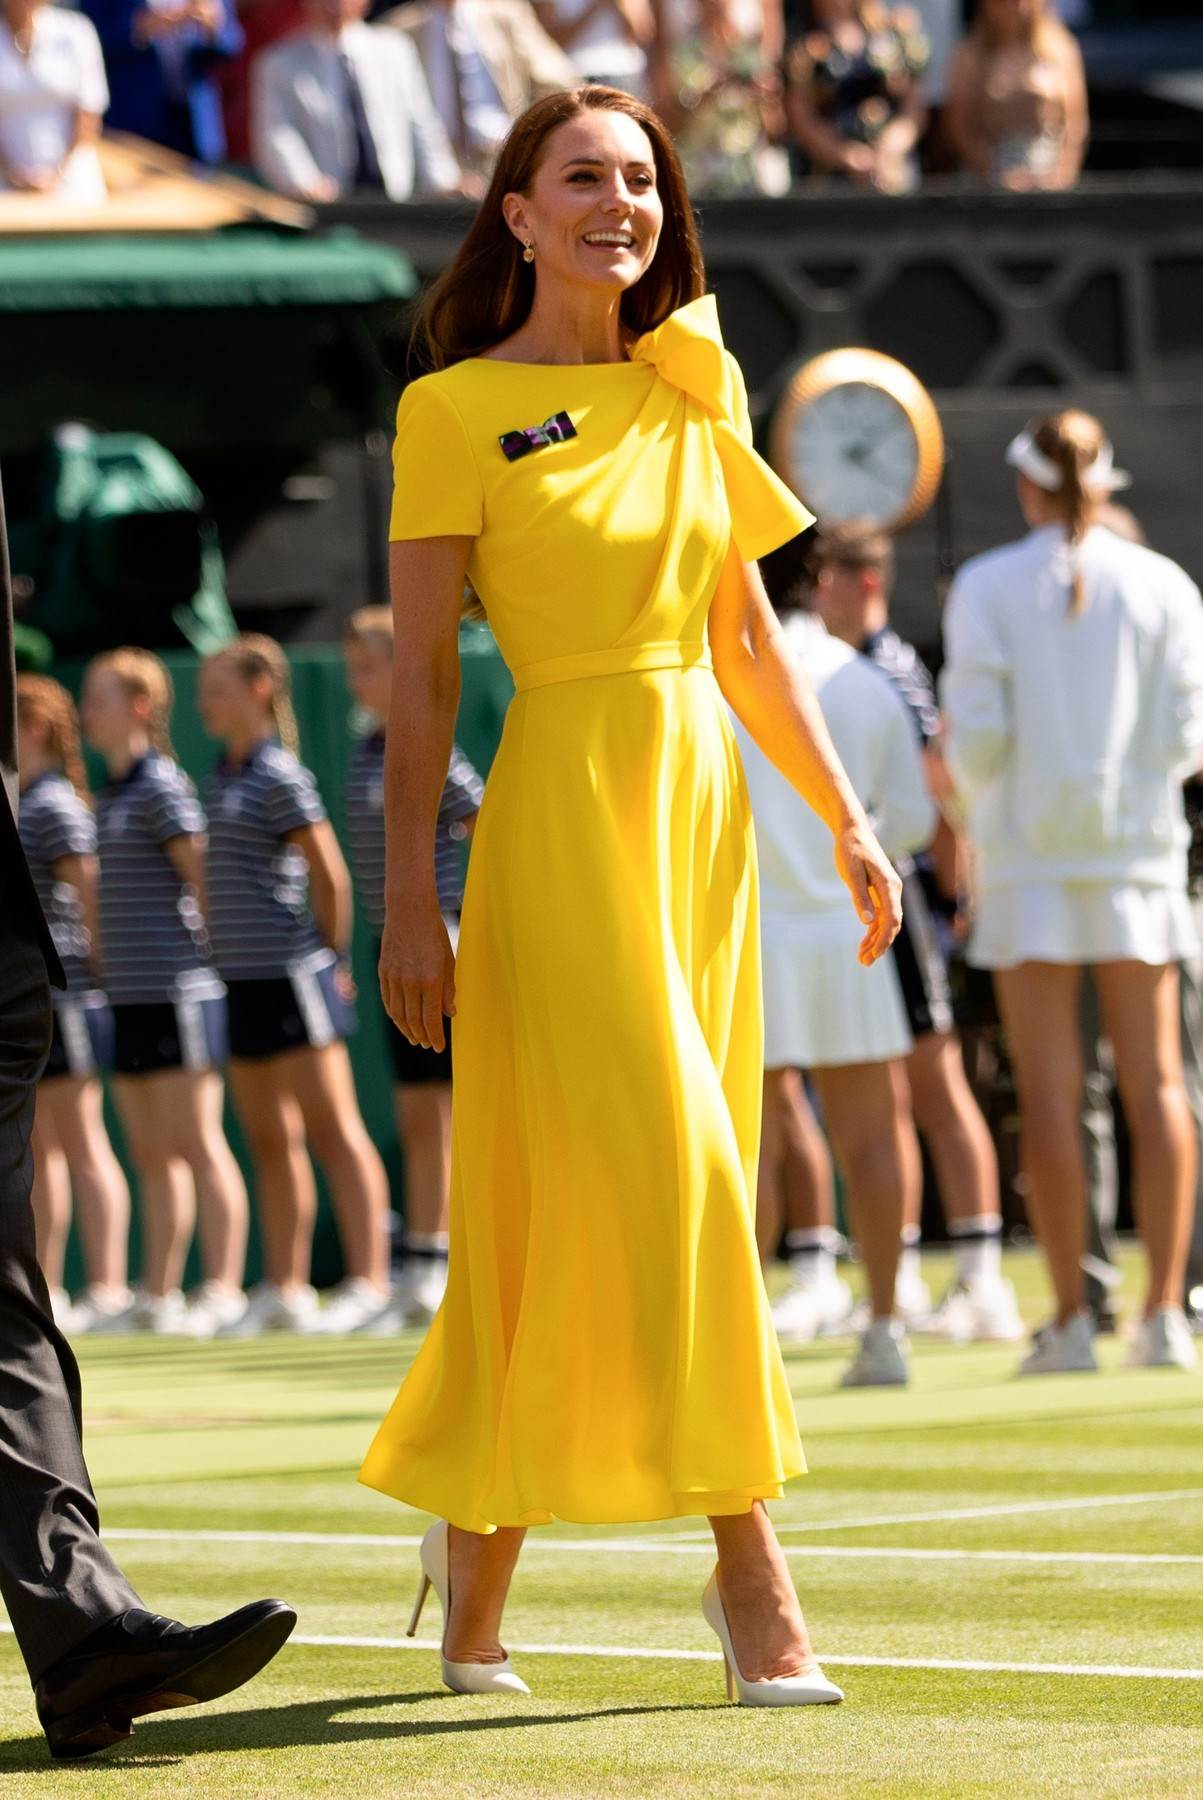  Kejt midlton oduševila je sve žutom haljinom. 